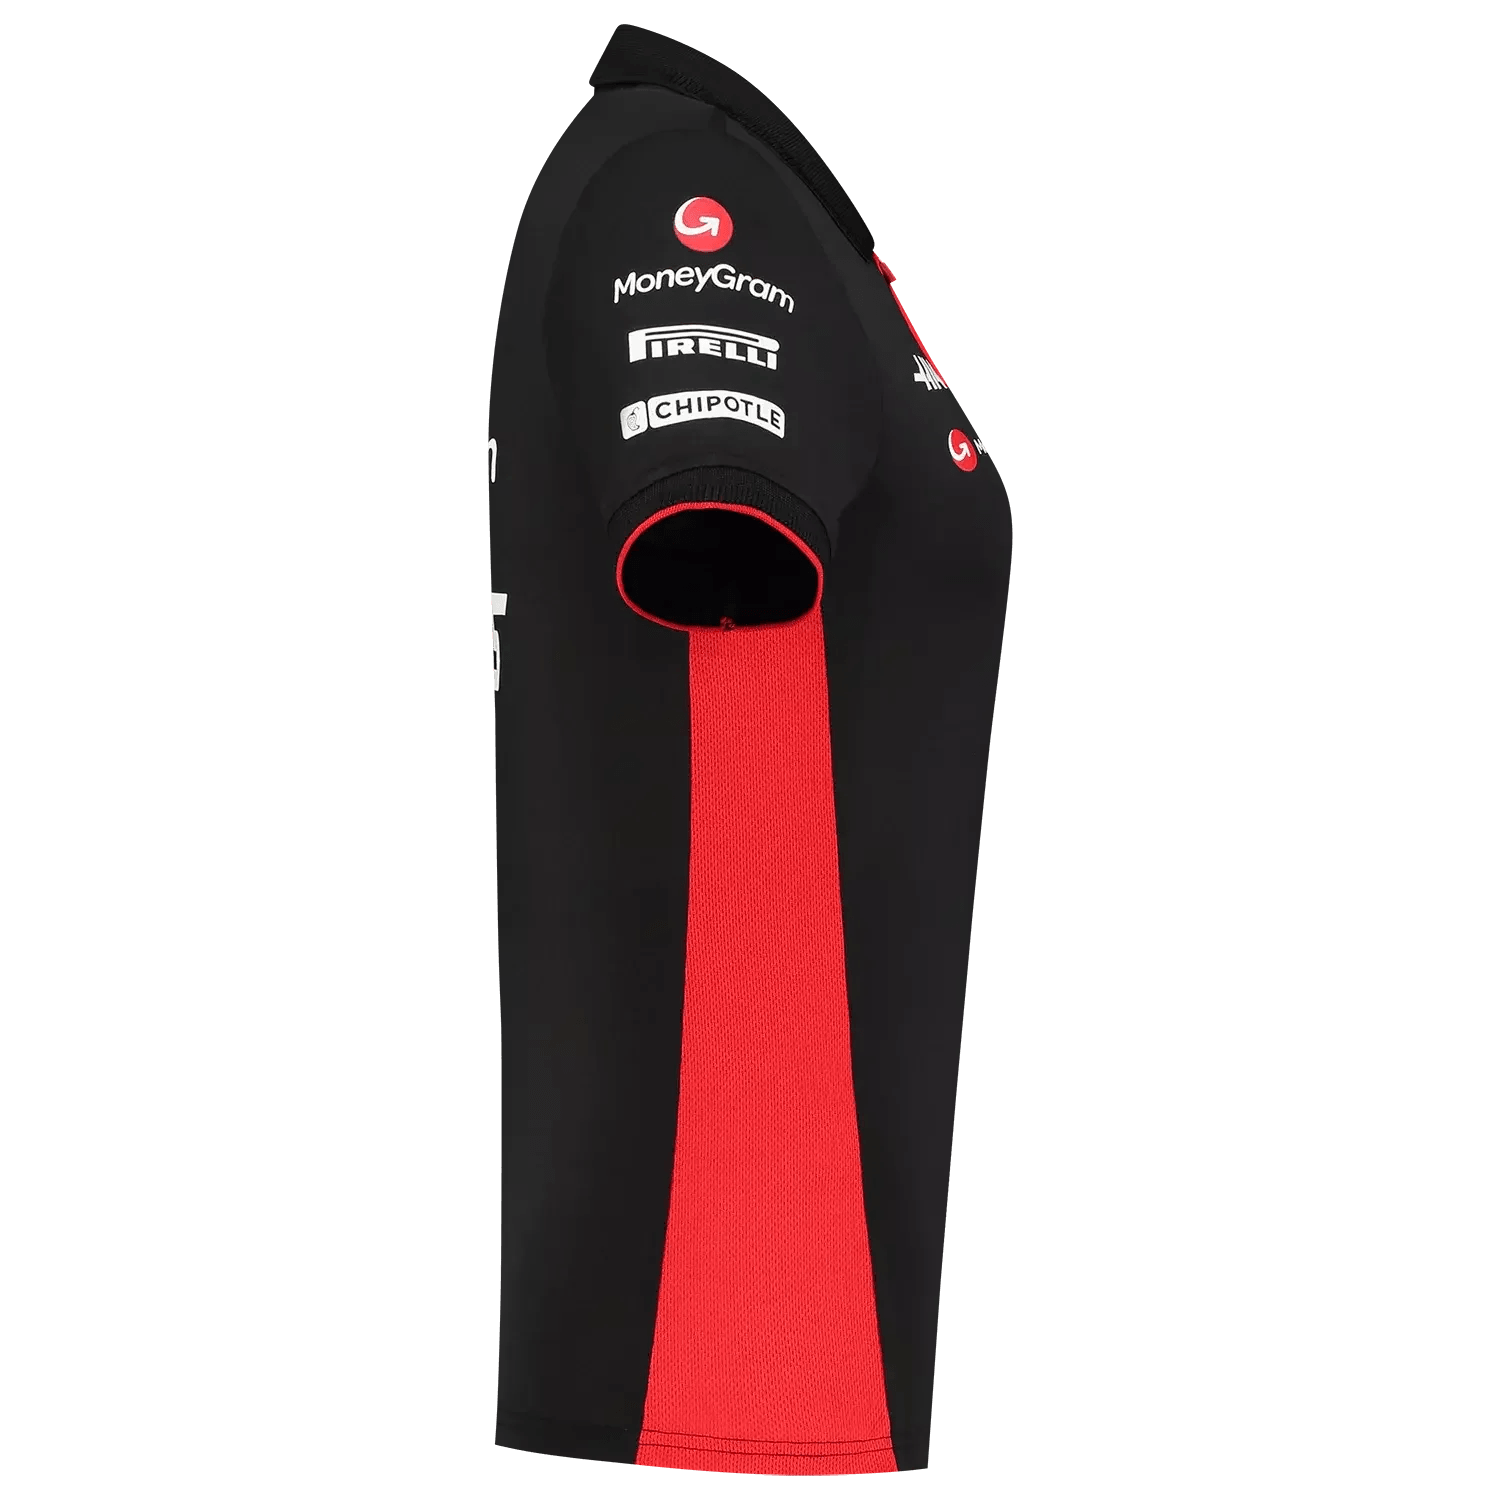 Women’s Fitted Polo Haas F1 Team - Dash Racegear 